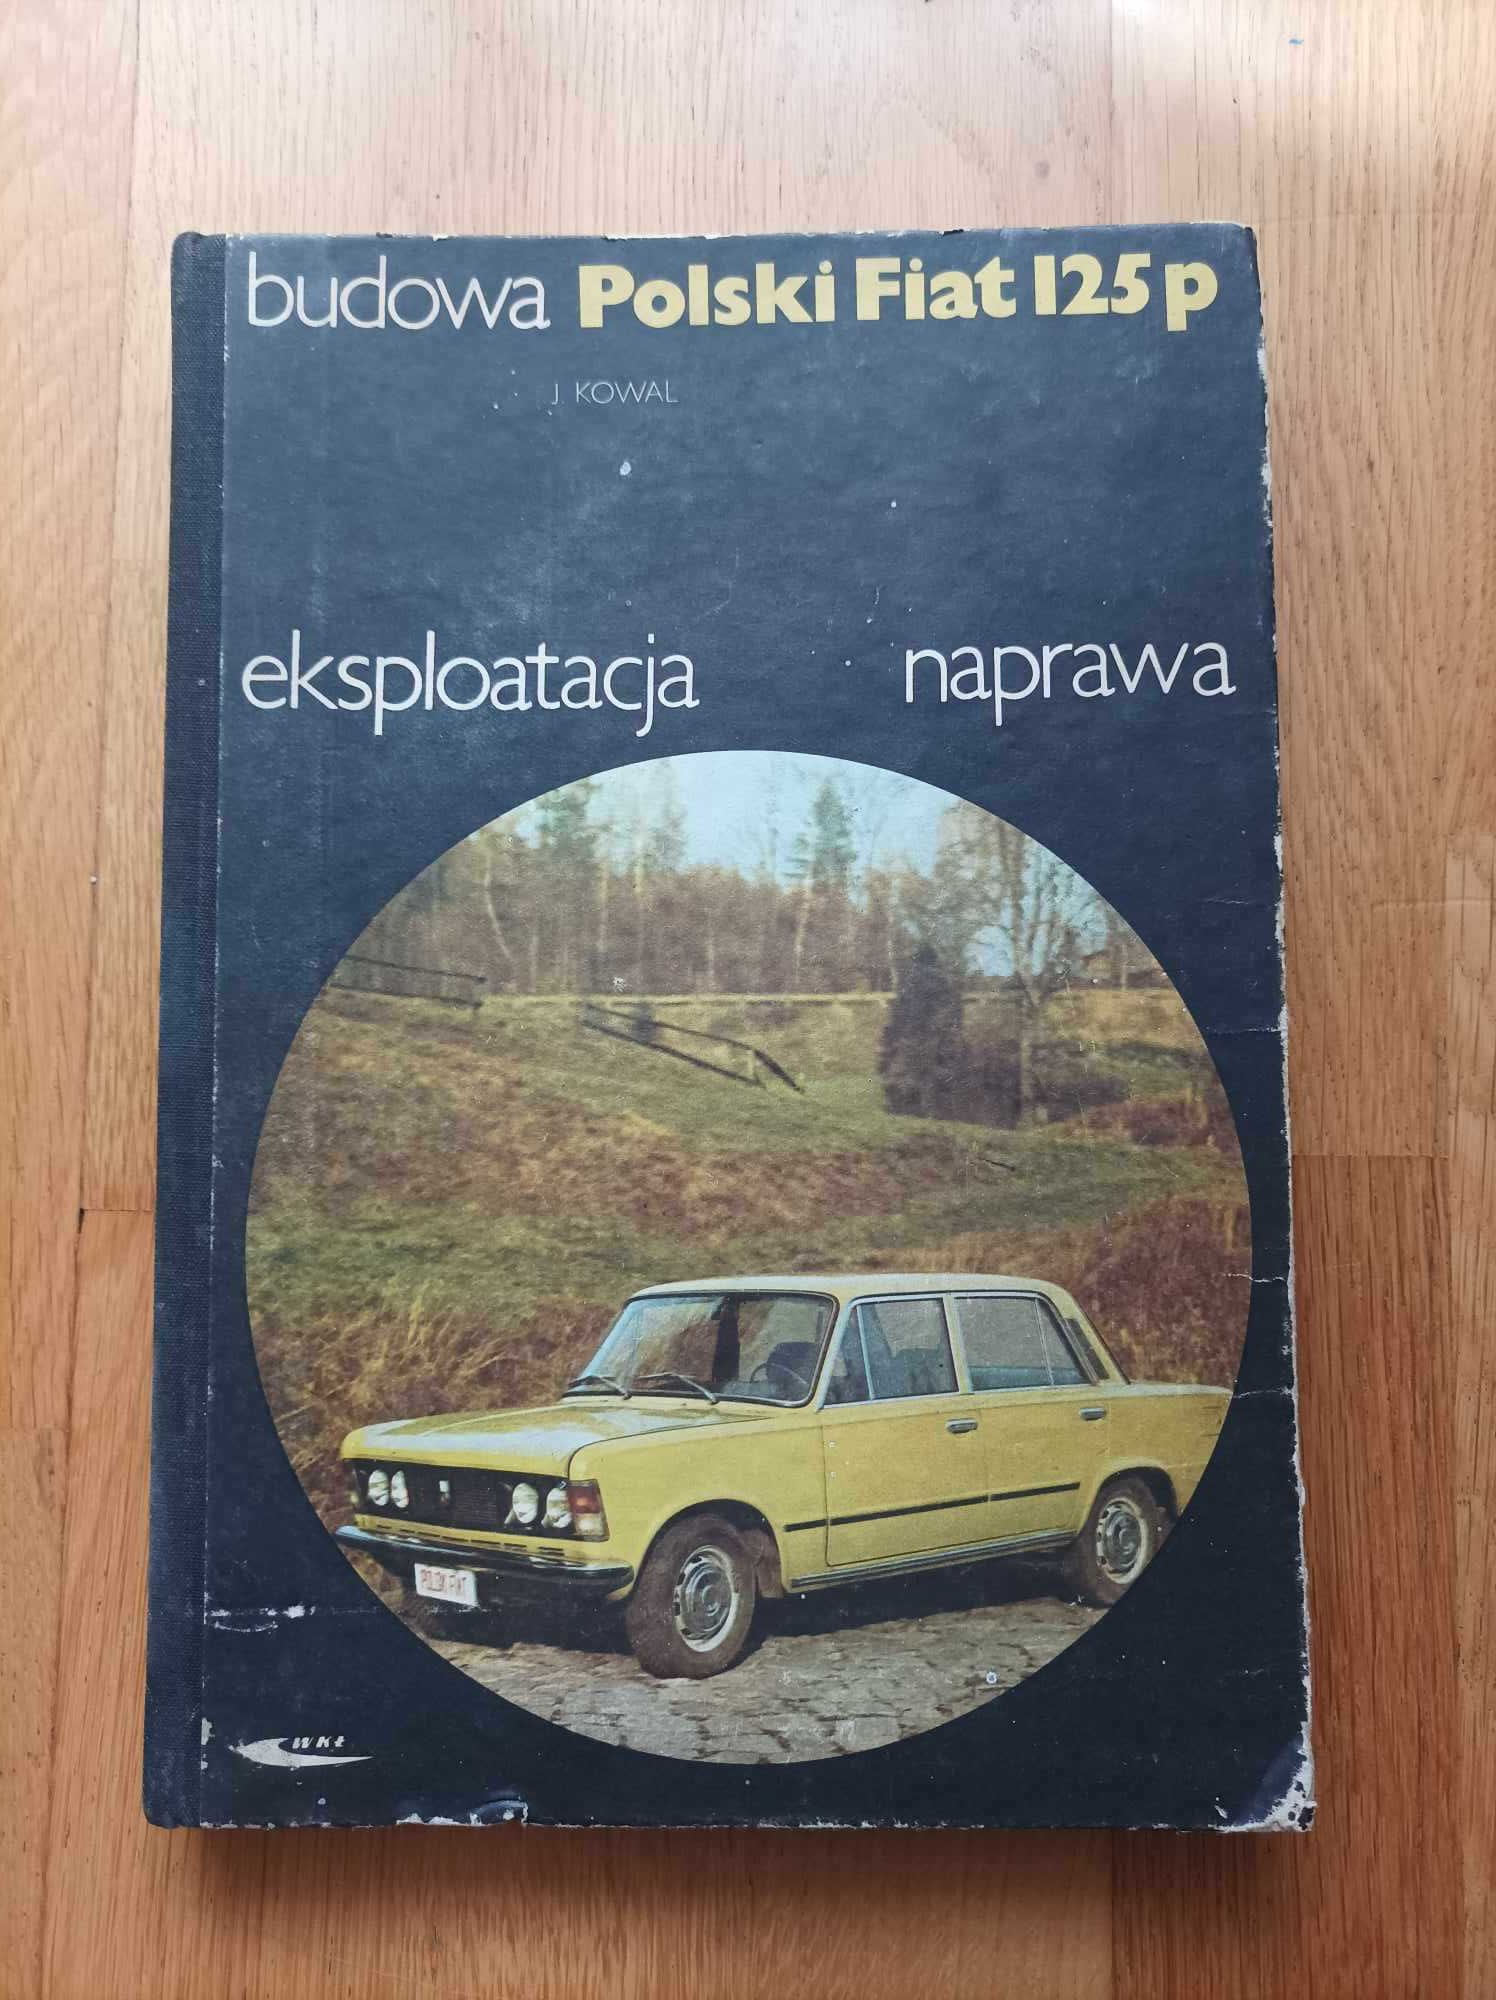 Polski Fiat 125p budowa eksploatacja naprawa J. Kowal 1982 książka